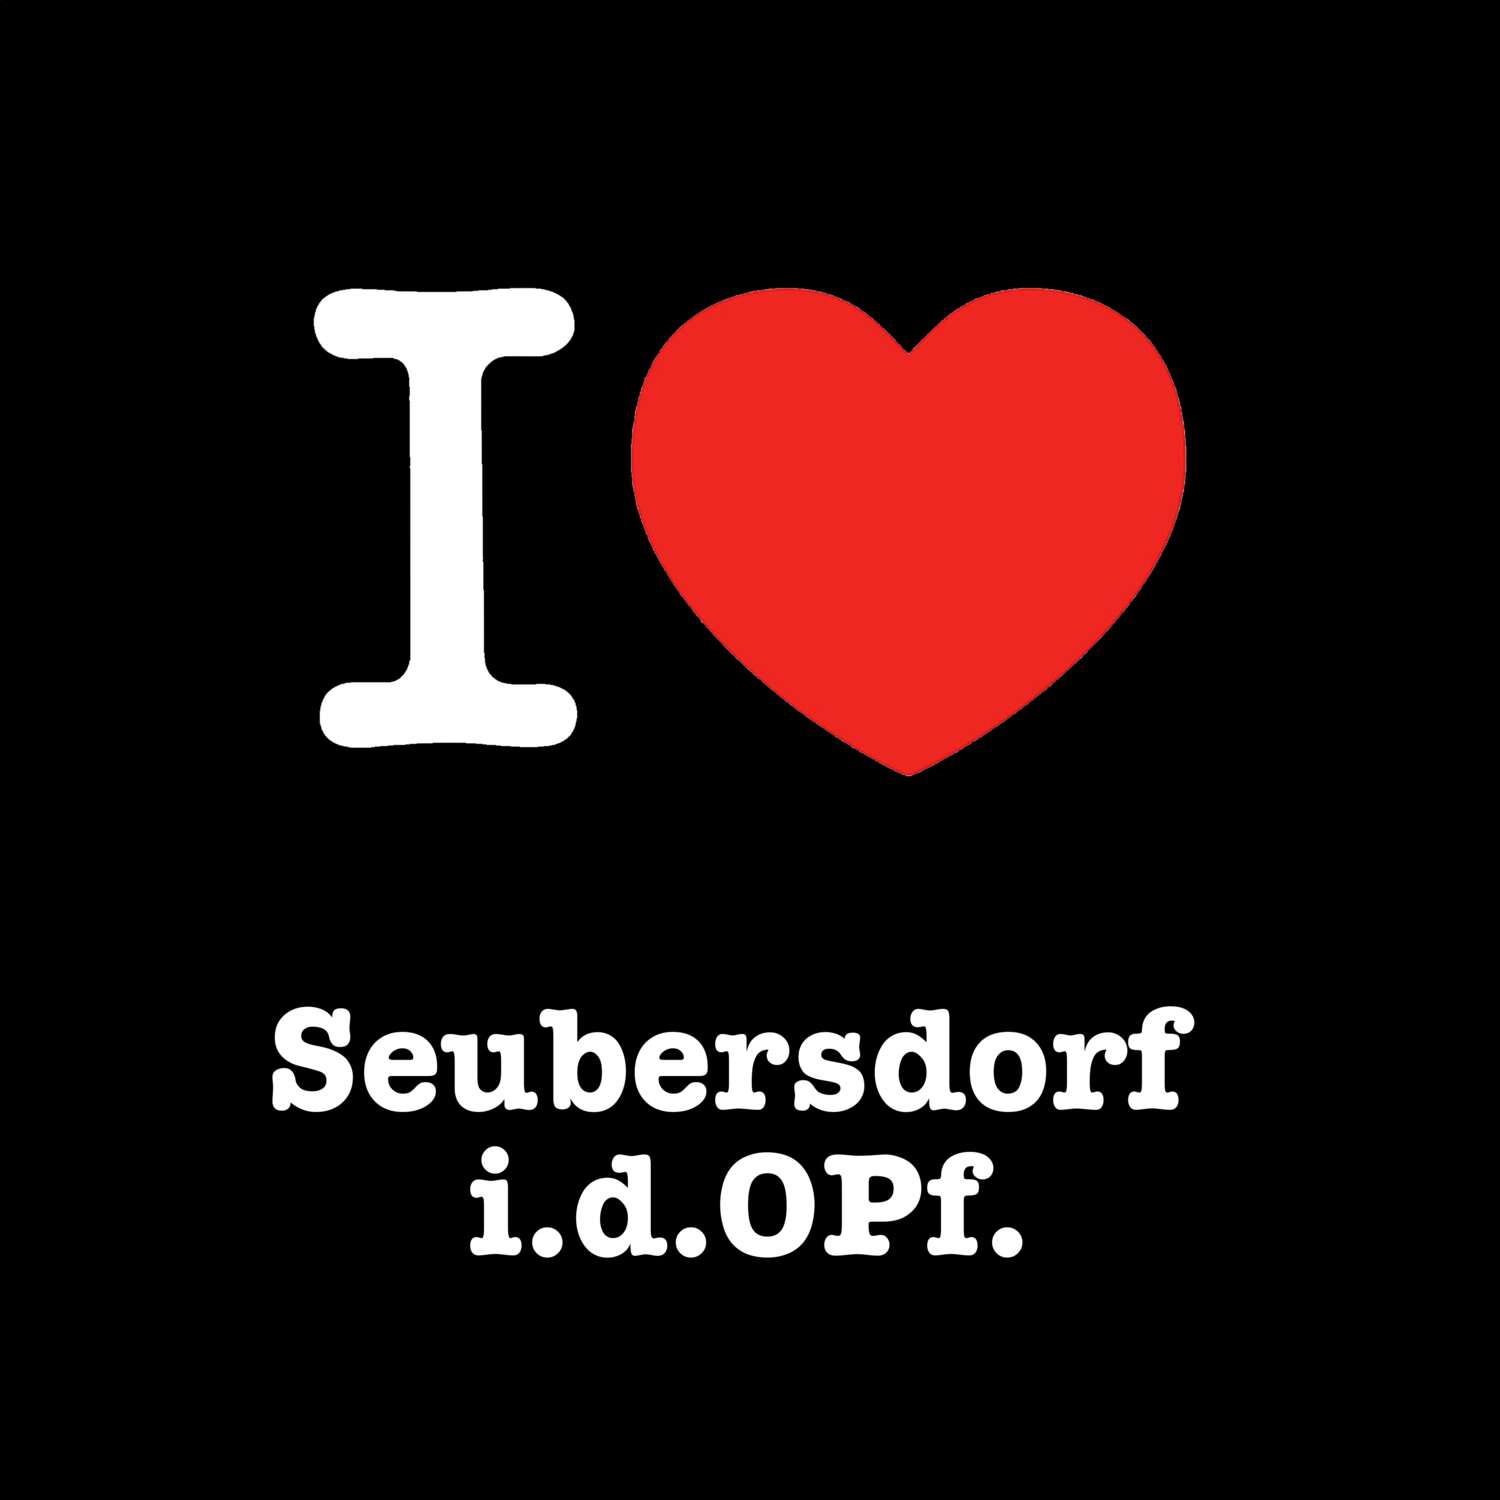 Seubersdorf i.d.OPf. T-Shirt »I love«